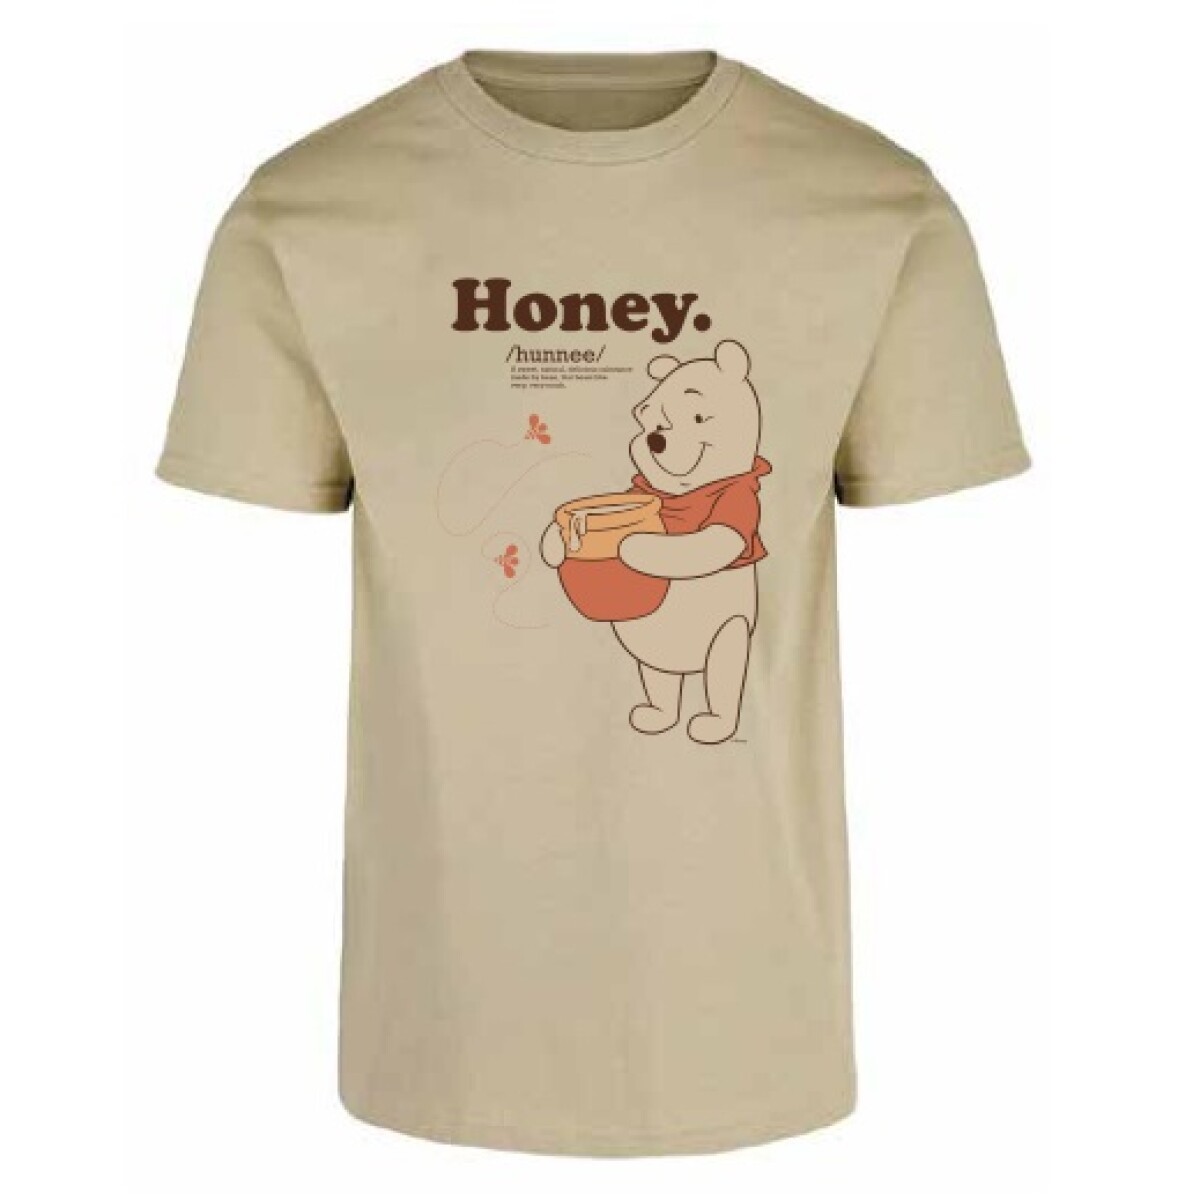 Camiseta Remera a la Base Disney Pooh Honey - BEIGE 